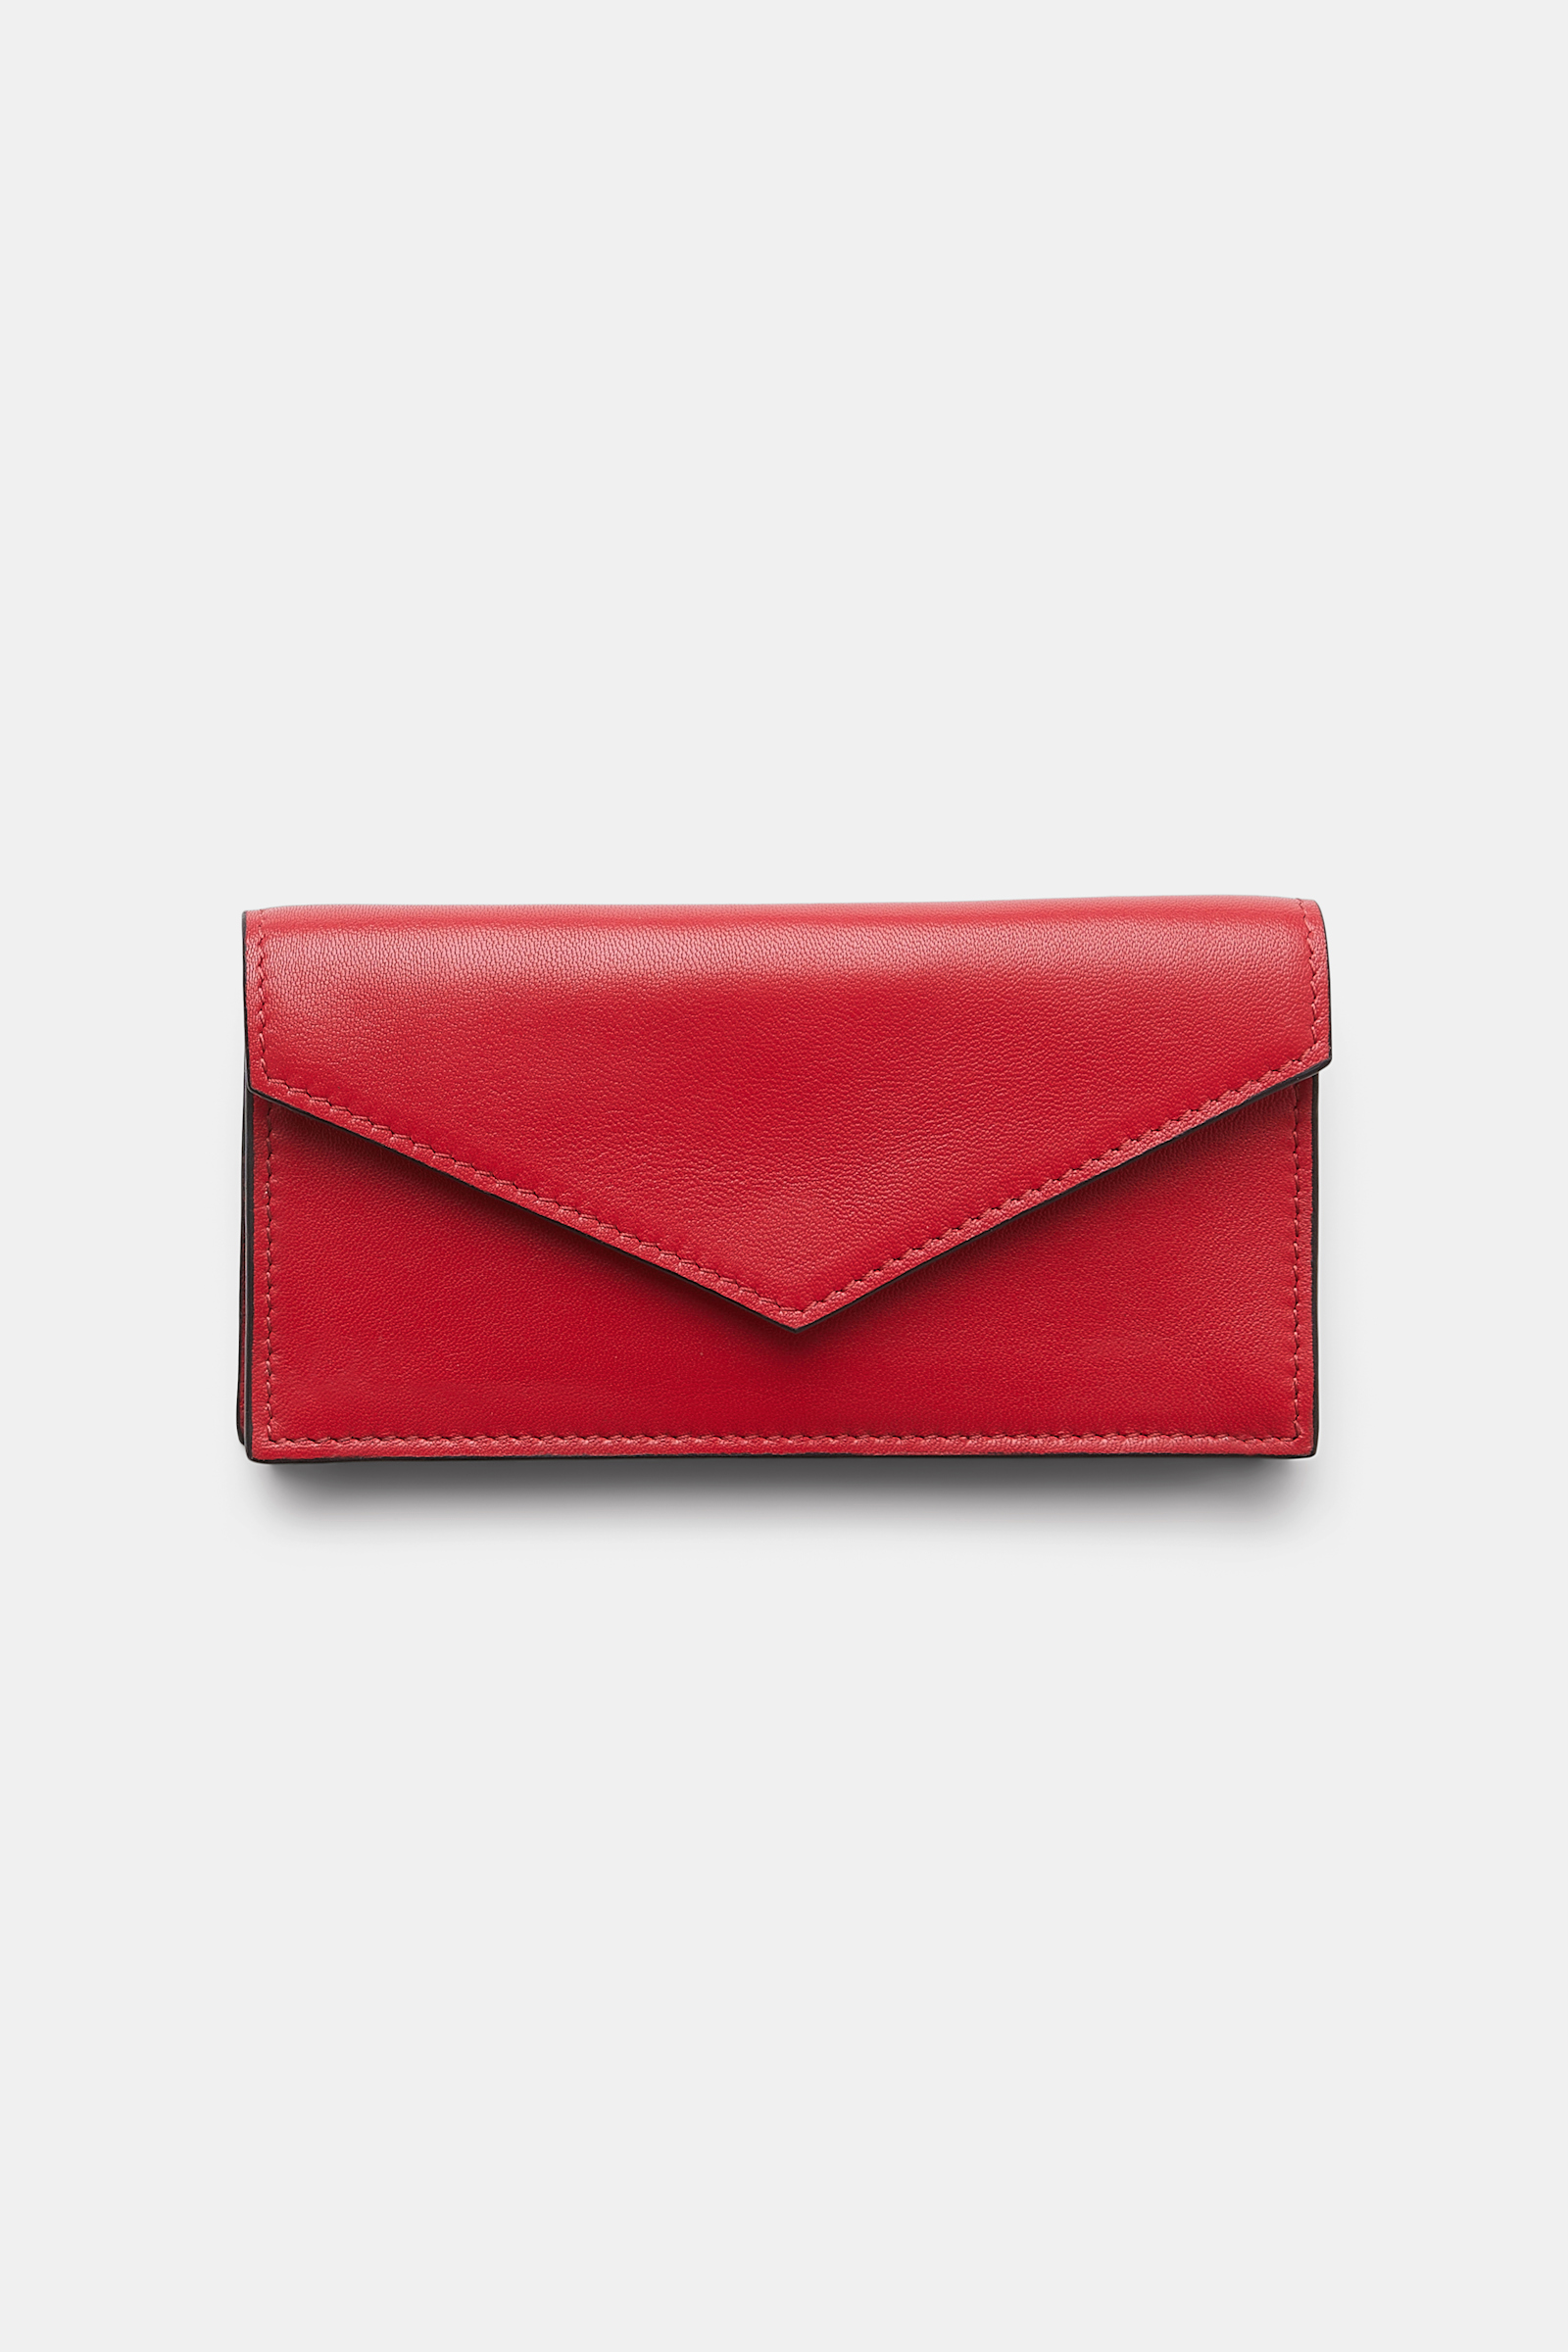 Dorothee Schumacher Envelope wallet cherry red